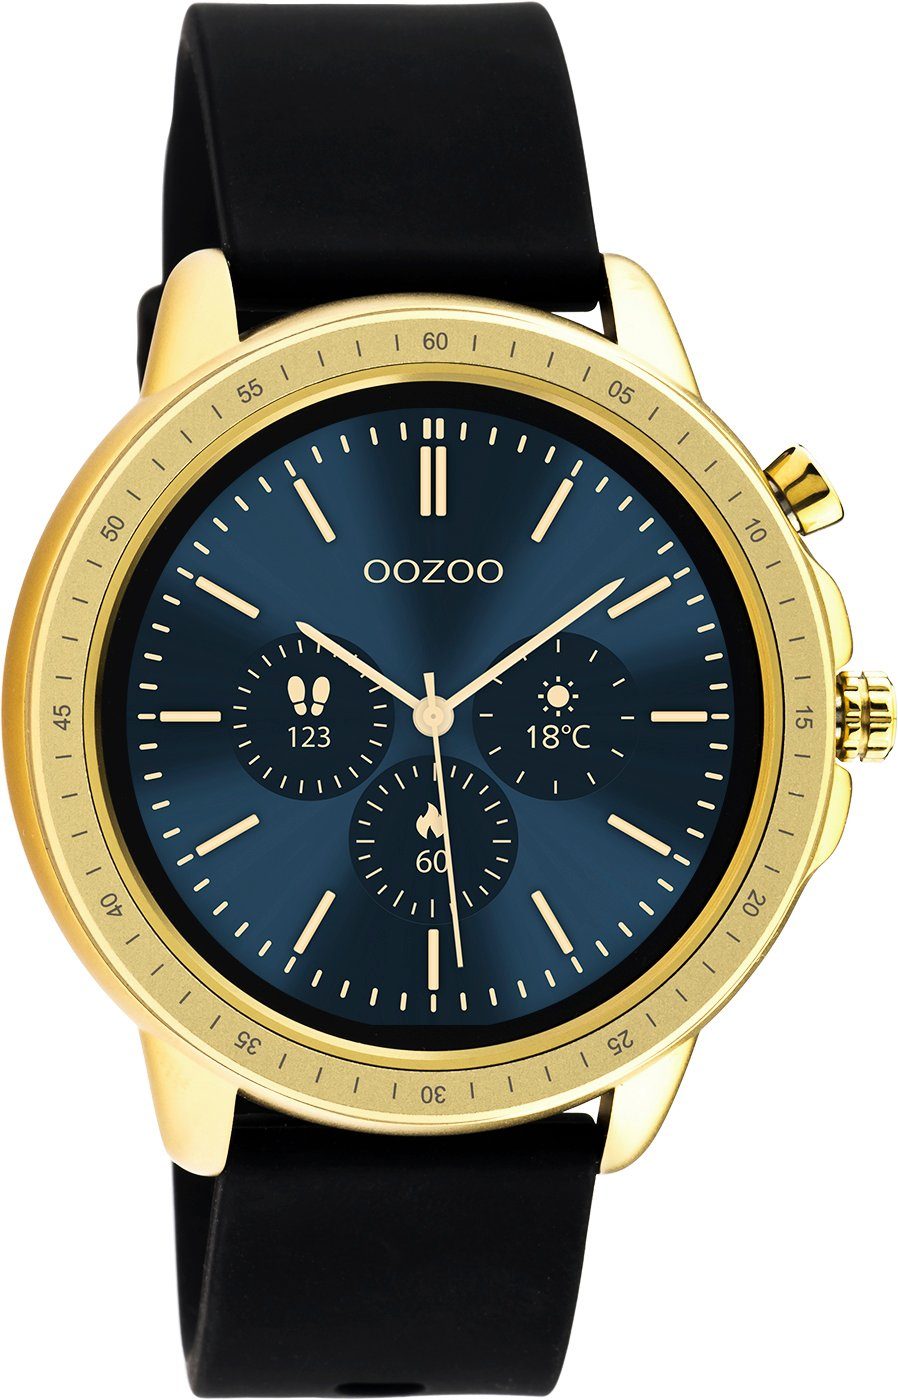 Goldfarben OOZOO Armbanduhr mm 45 Silikonband Smartwatch Q00301 Schwarz